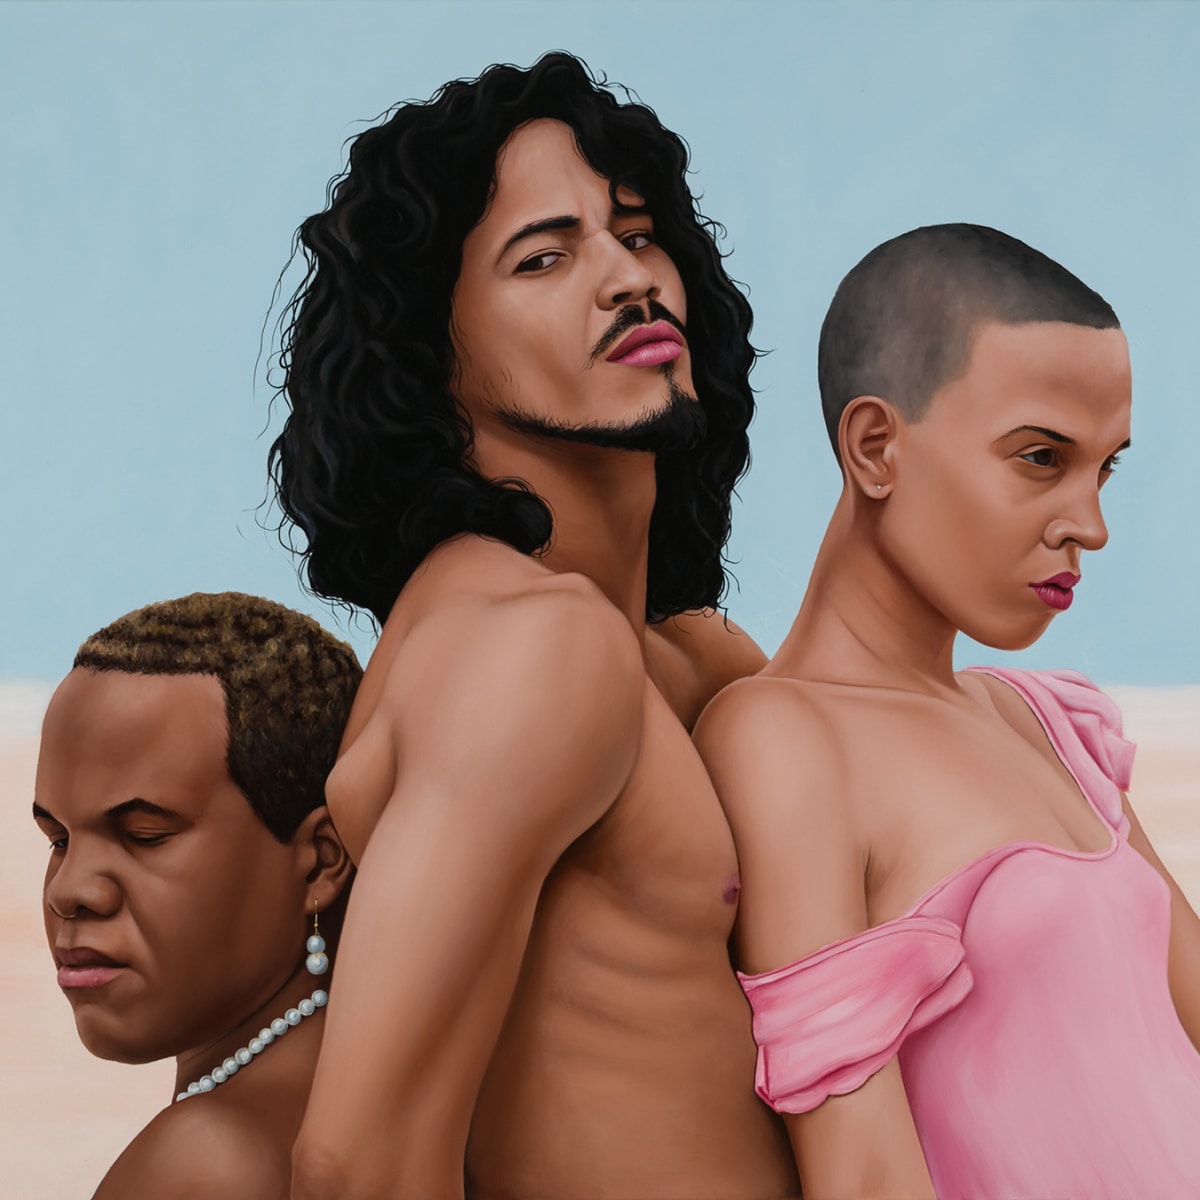 Gabriel Sanchez paints his young Cuban friends making their way through troubled times